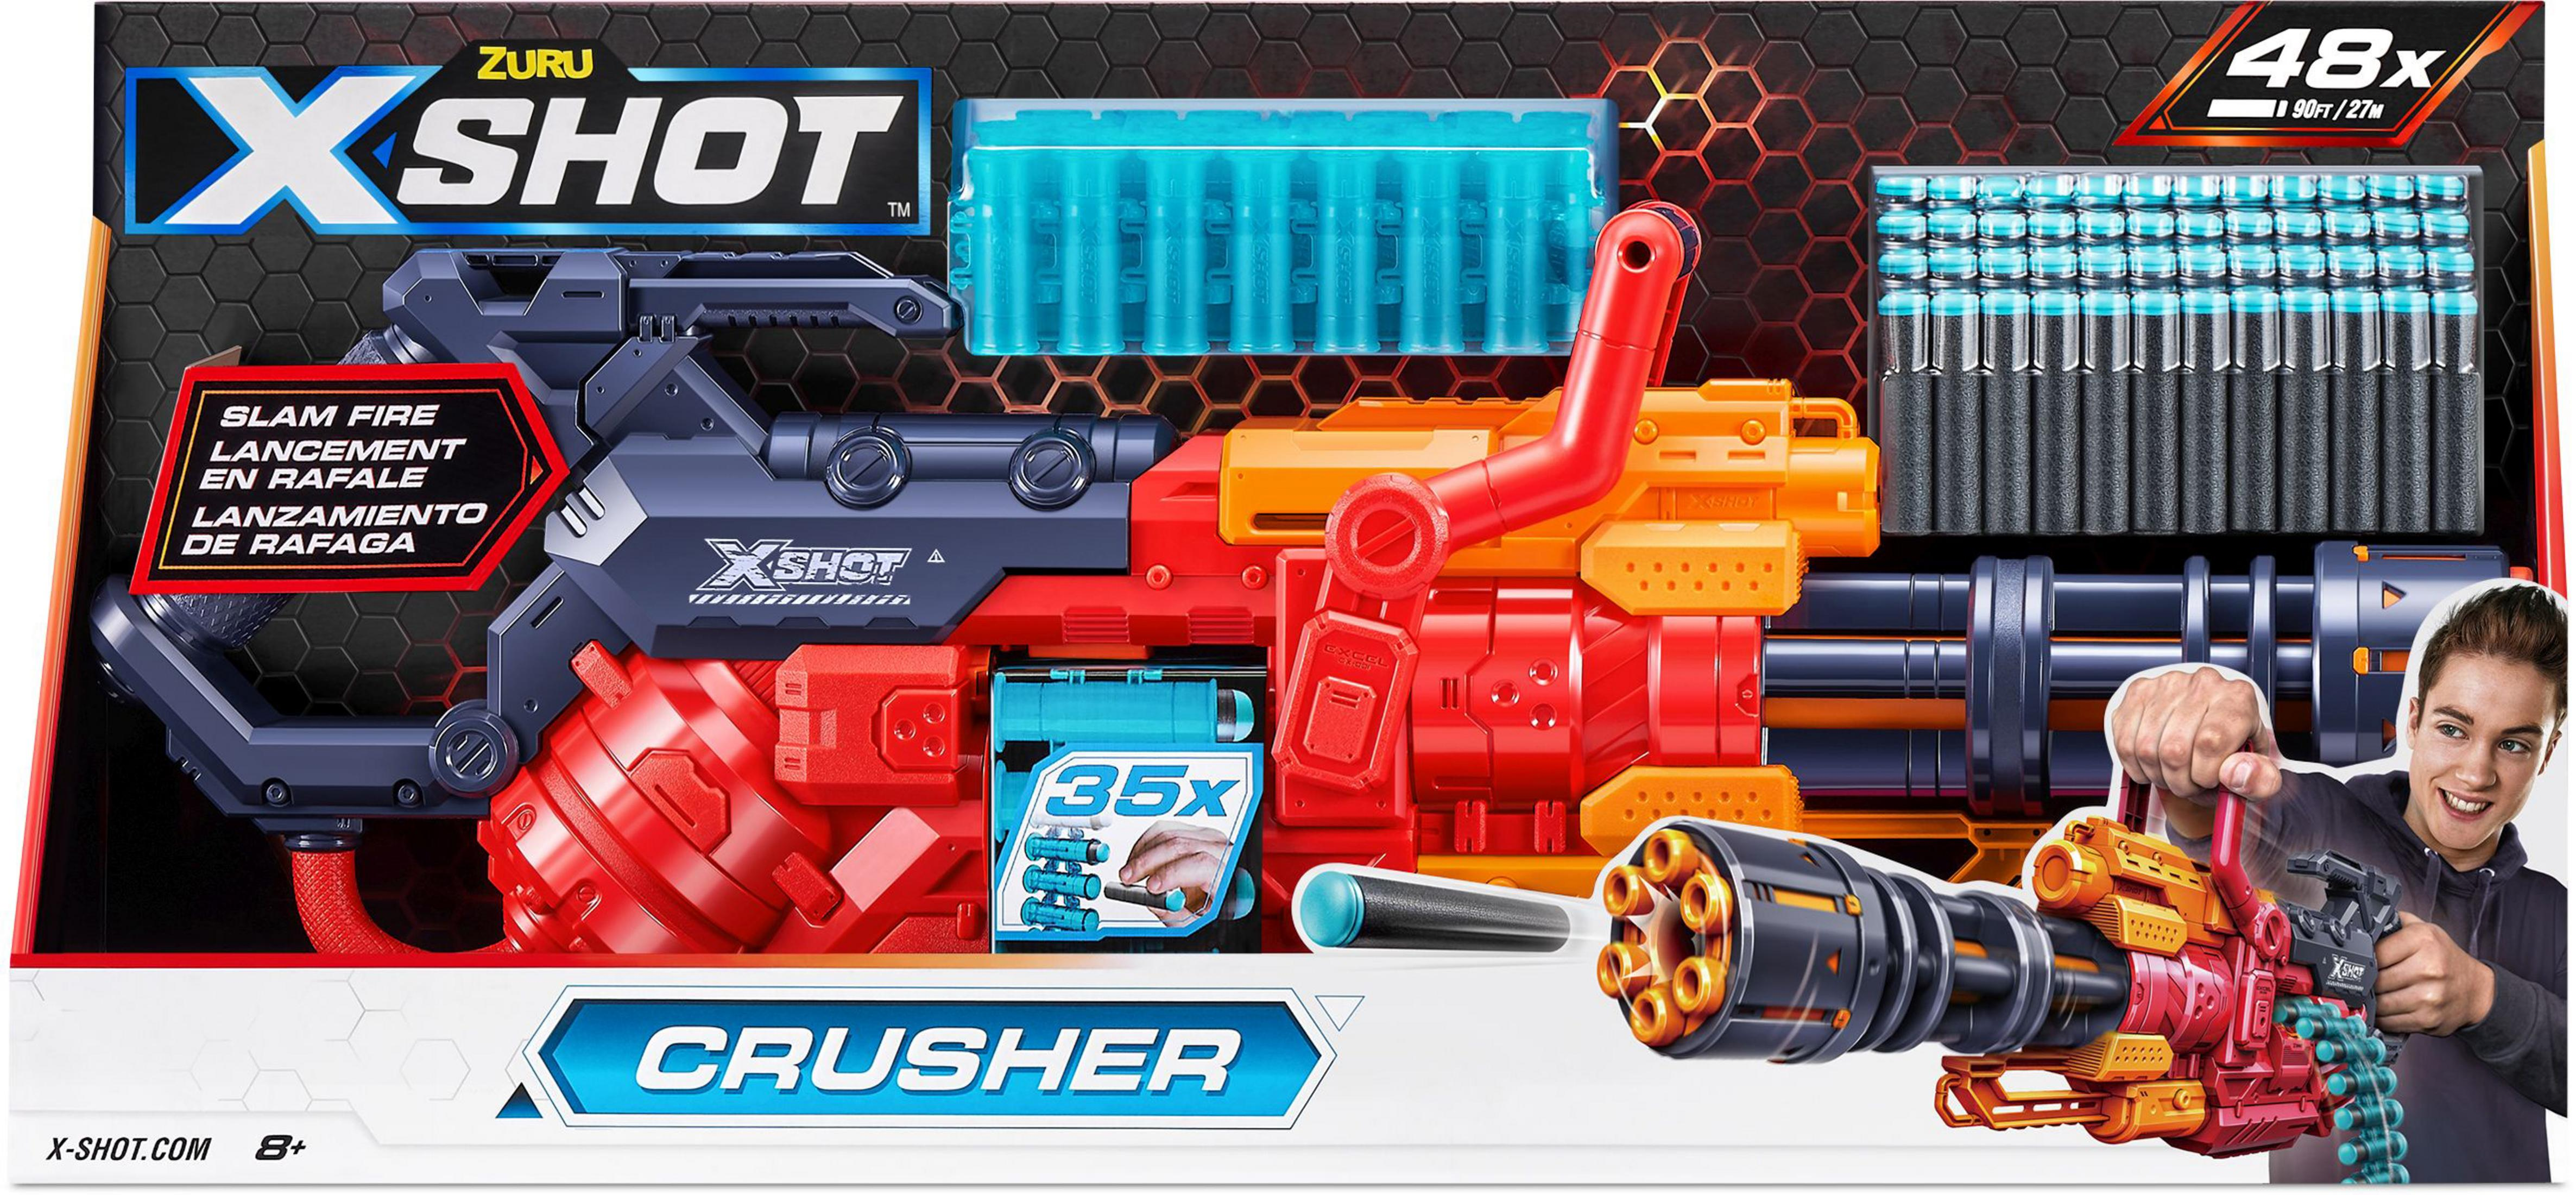 EXCEL Mehrfarbig 36382 ZURU X-SHOT Blaster CRUSHER